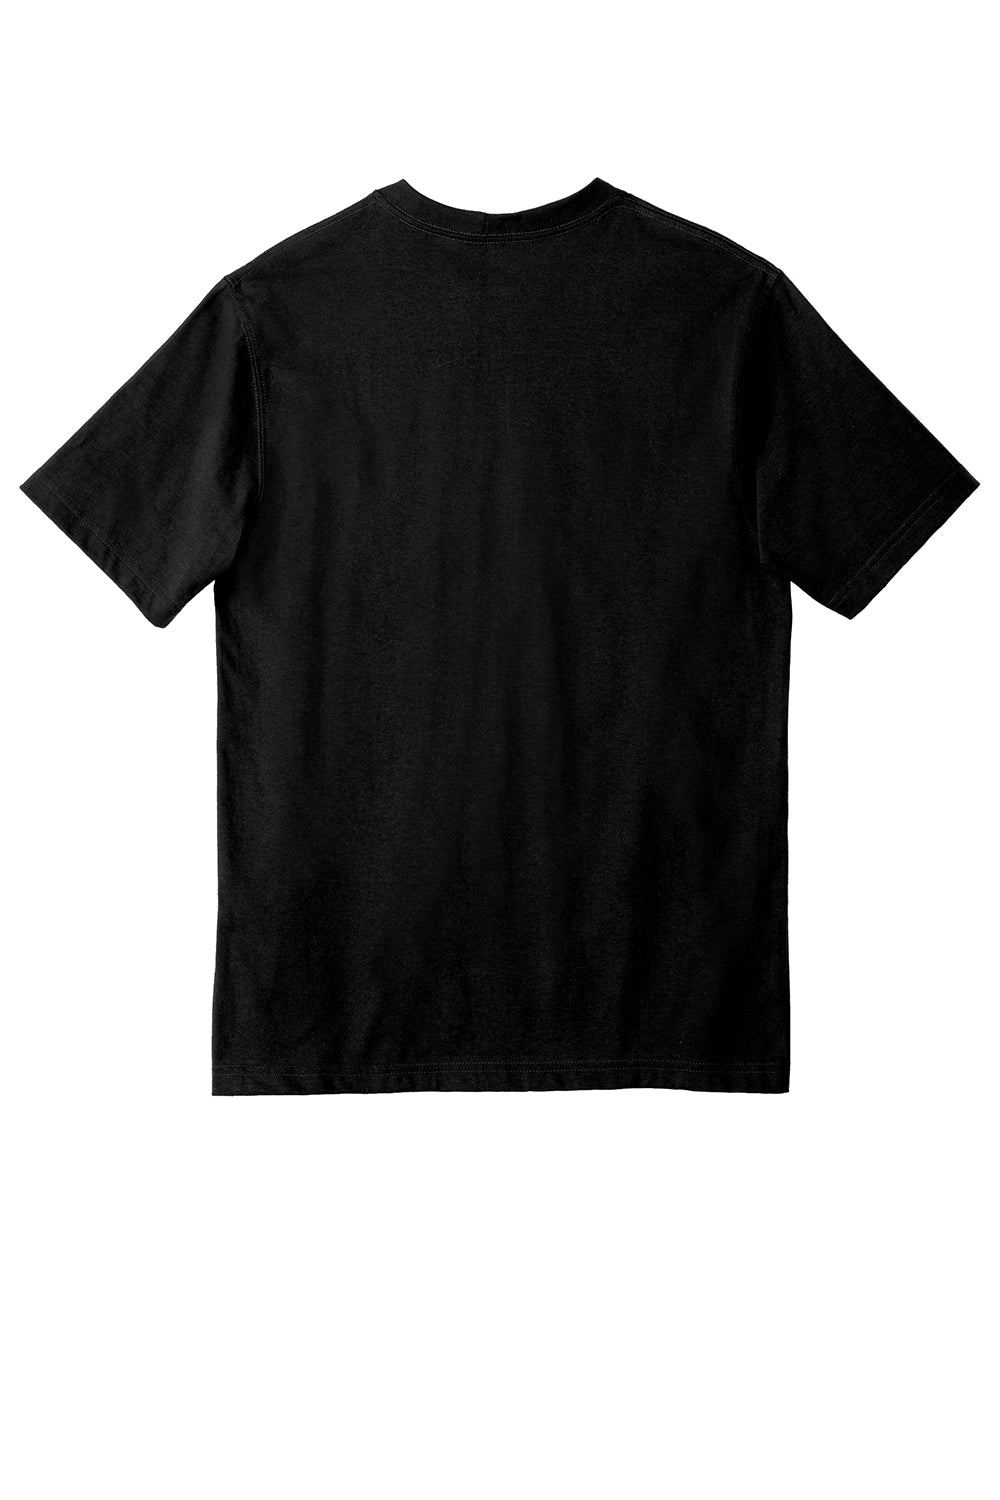 Carhartt CTK87/CTTK87 Mens Workwear Short Sleeve Crewneck T-Shirt w/ Pocket Black Flat Back